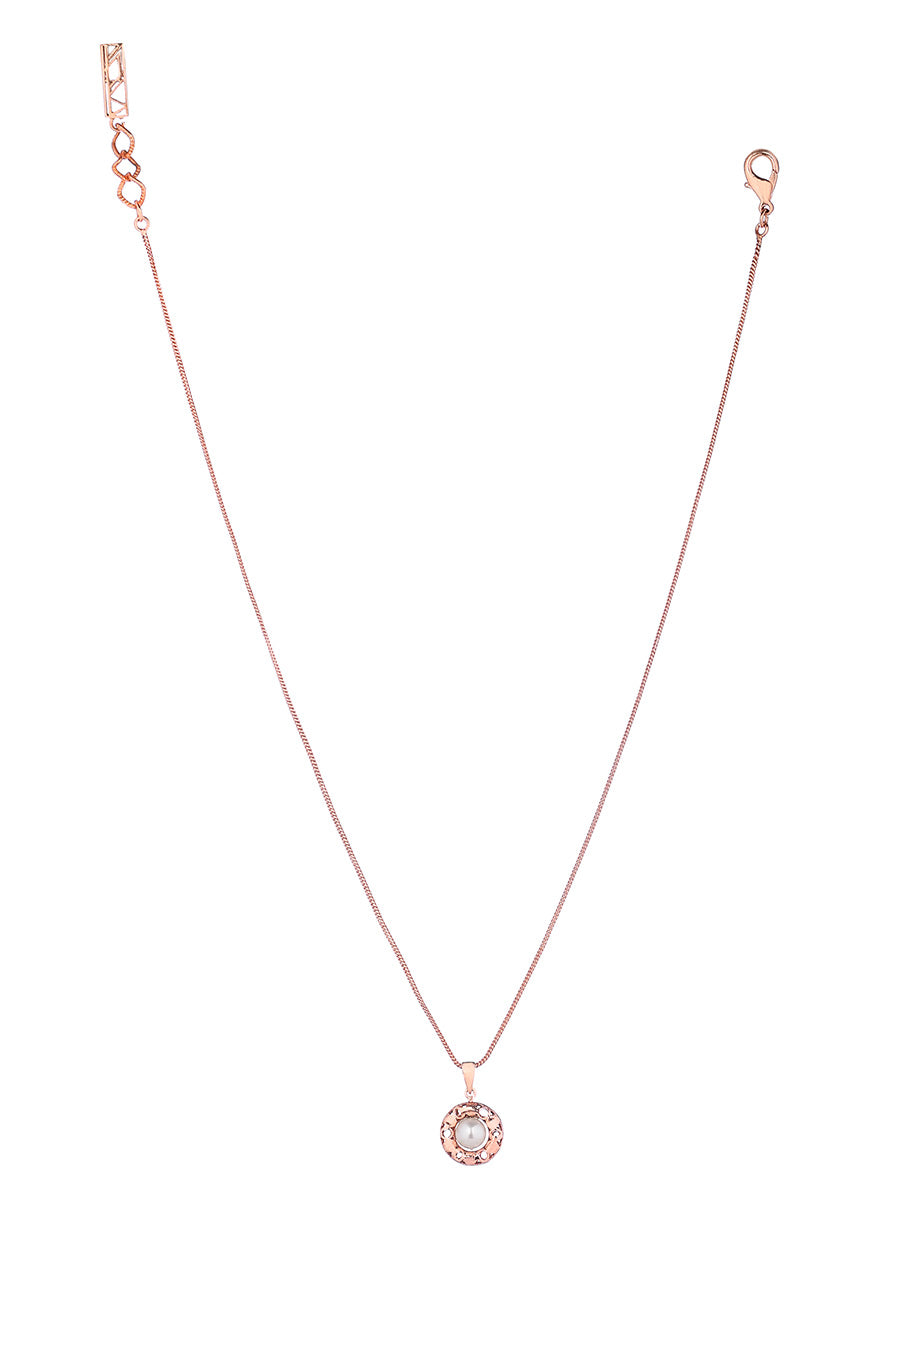 Pearl Celestial Pendant Necklace